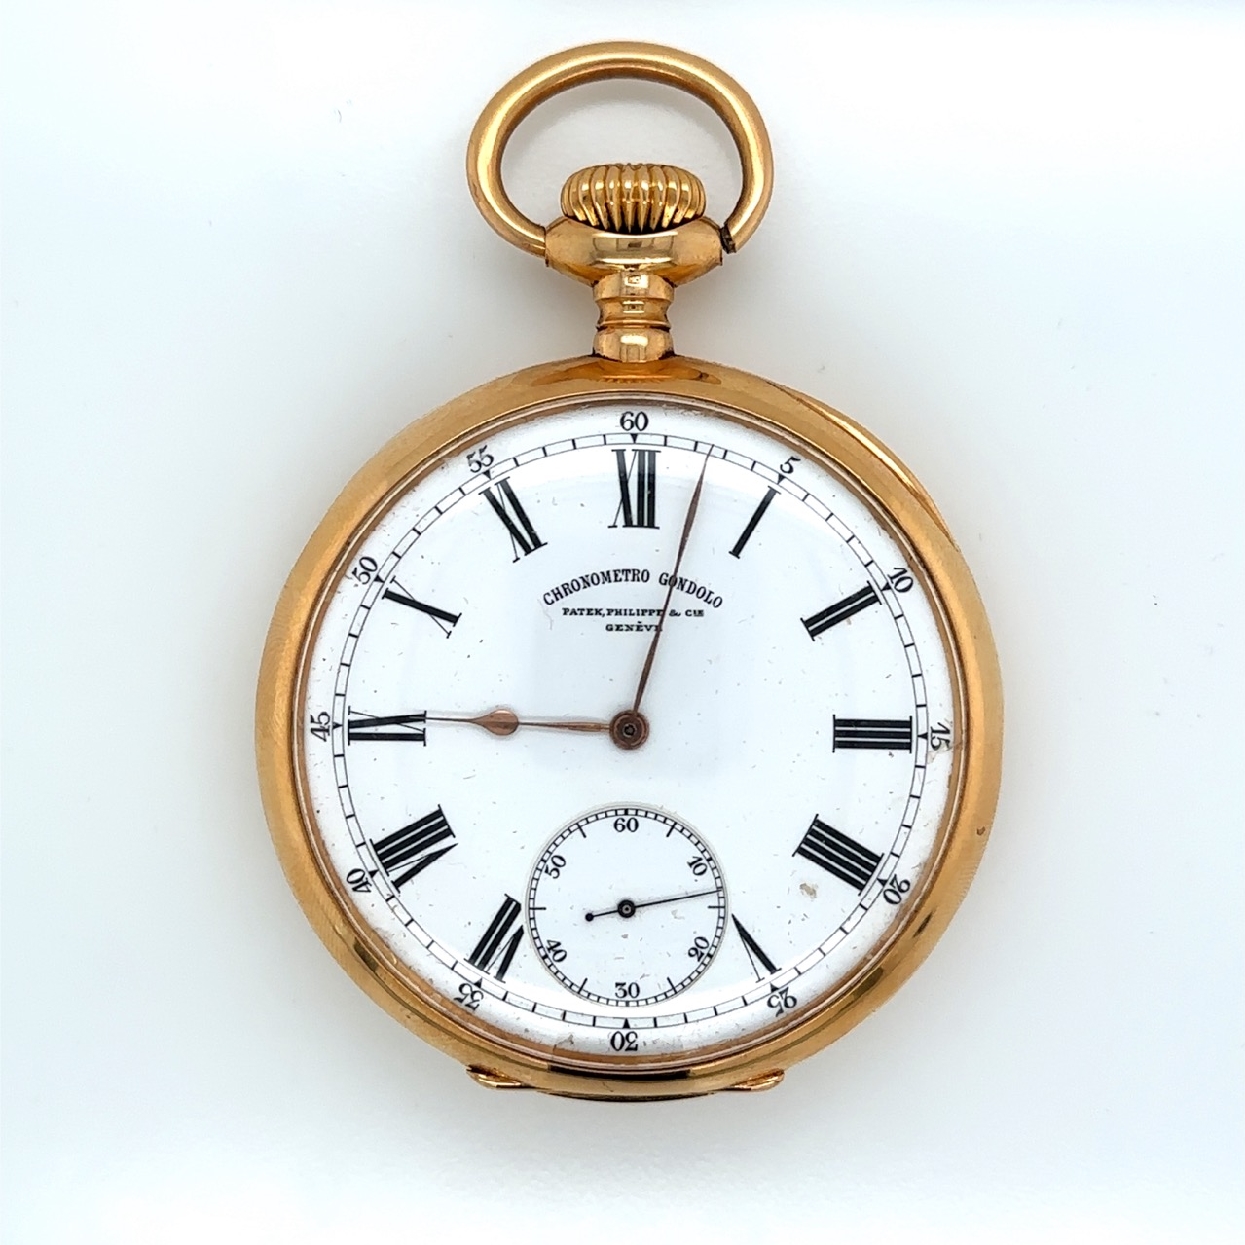 1903 18K Yellow Gold Patek Philippe & Co Poclet Watch 
Chronometro Gondolo

Comes with Original Box